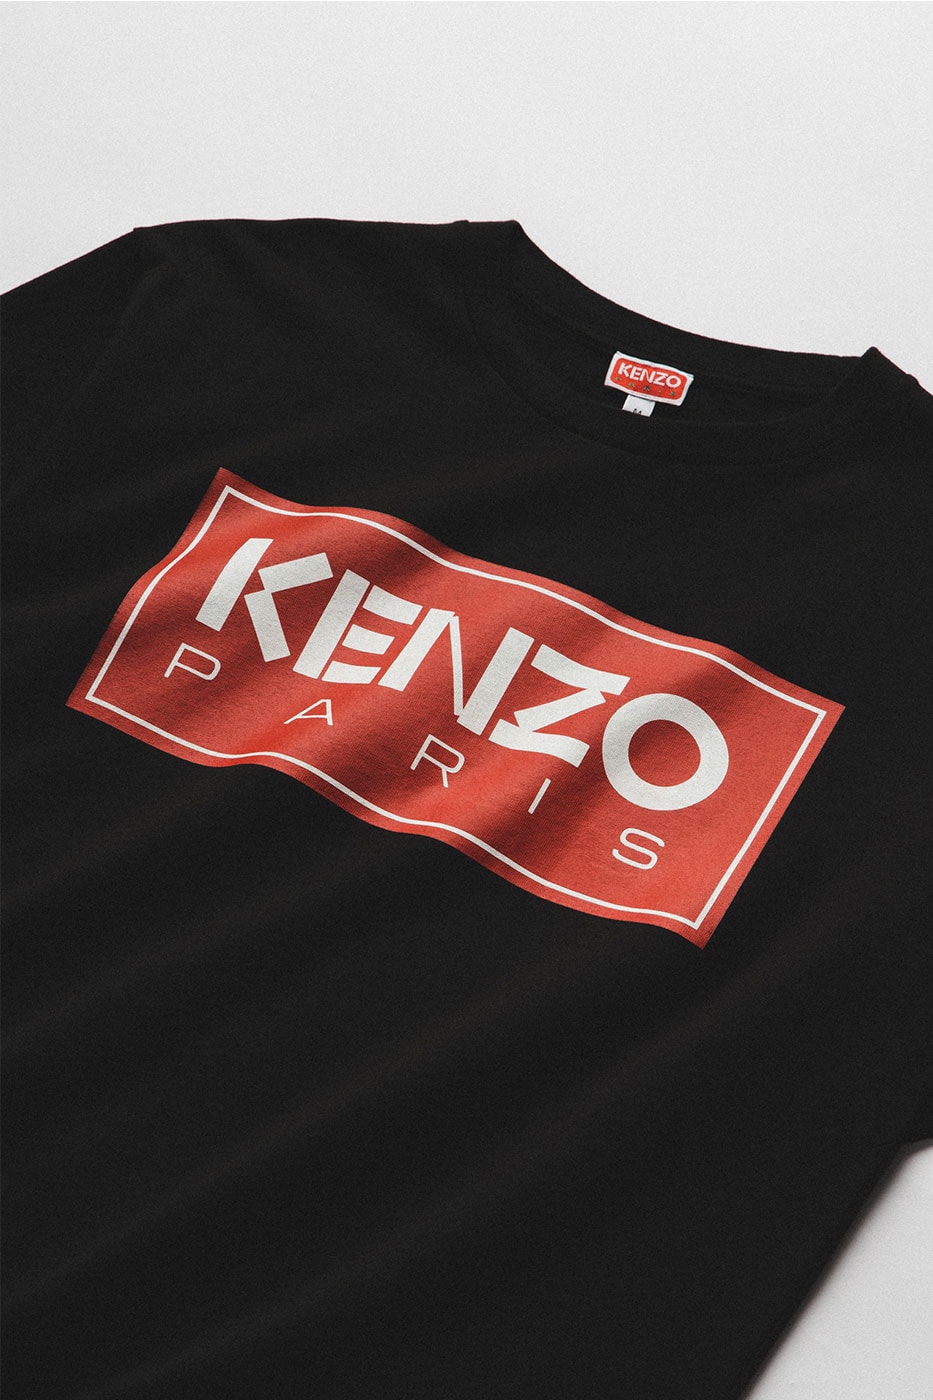 KENZO Paris FW22 Collection by NIGO Drop 2 HBX Release Info Buy Price